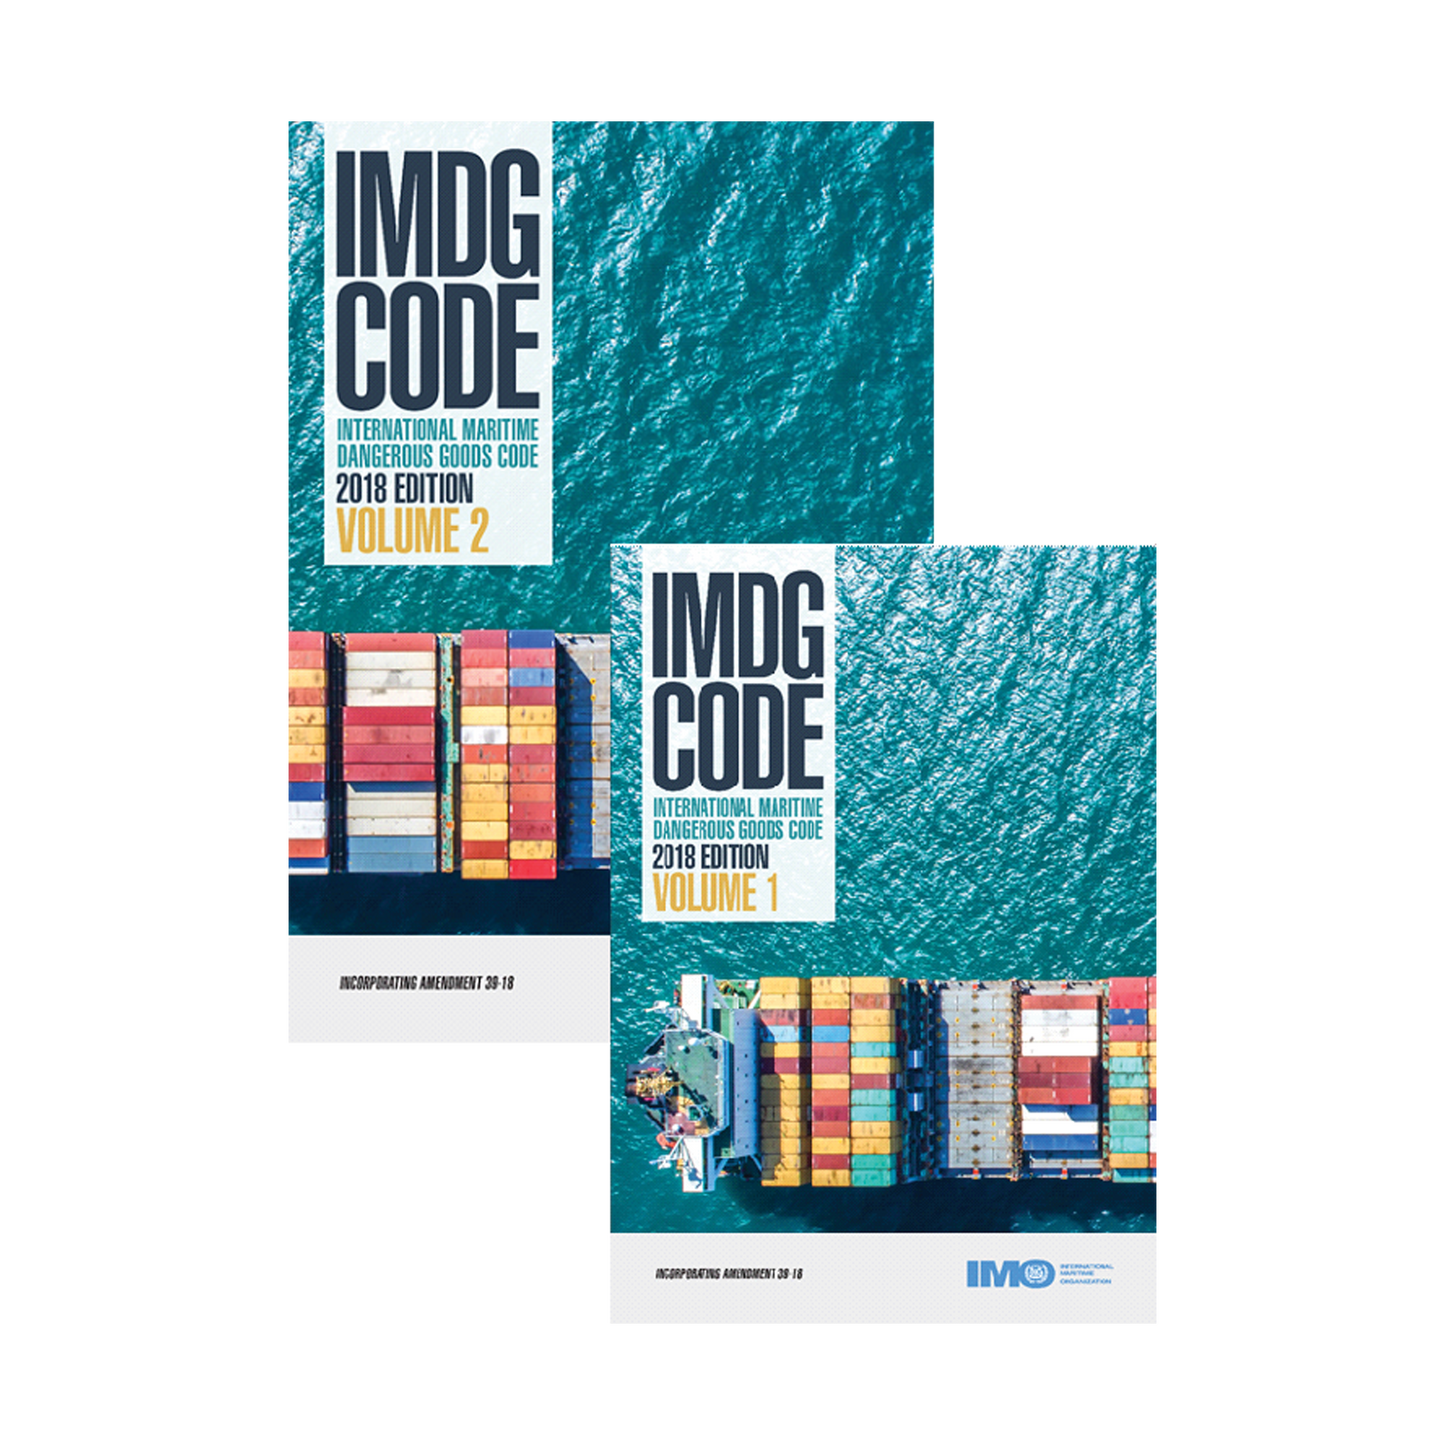 IMO International Maritime Dangerous Goods Code - IMDG CODES 39-18 (2 VOLUME SET)